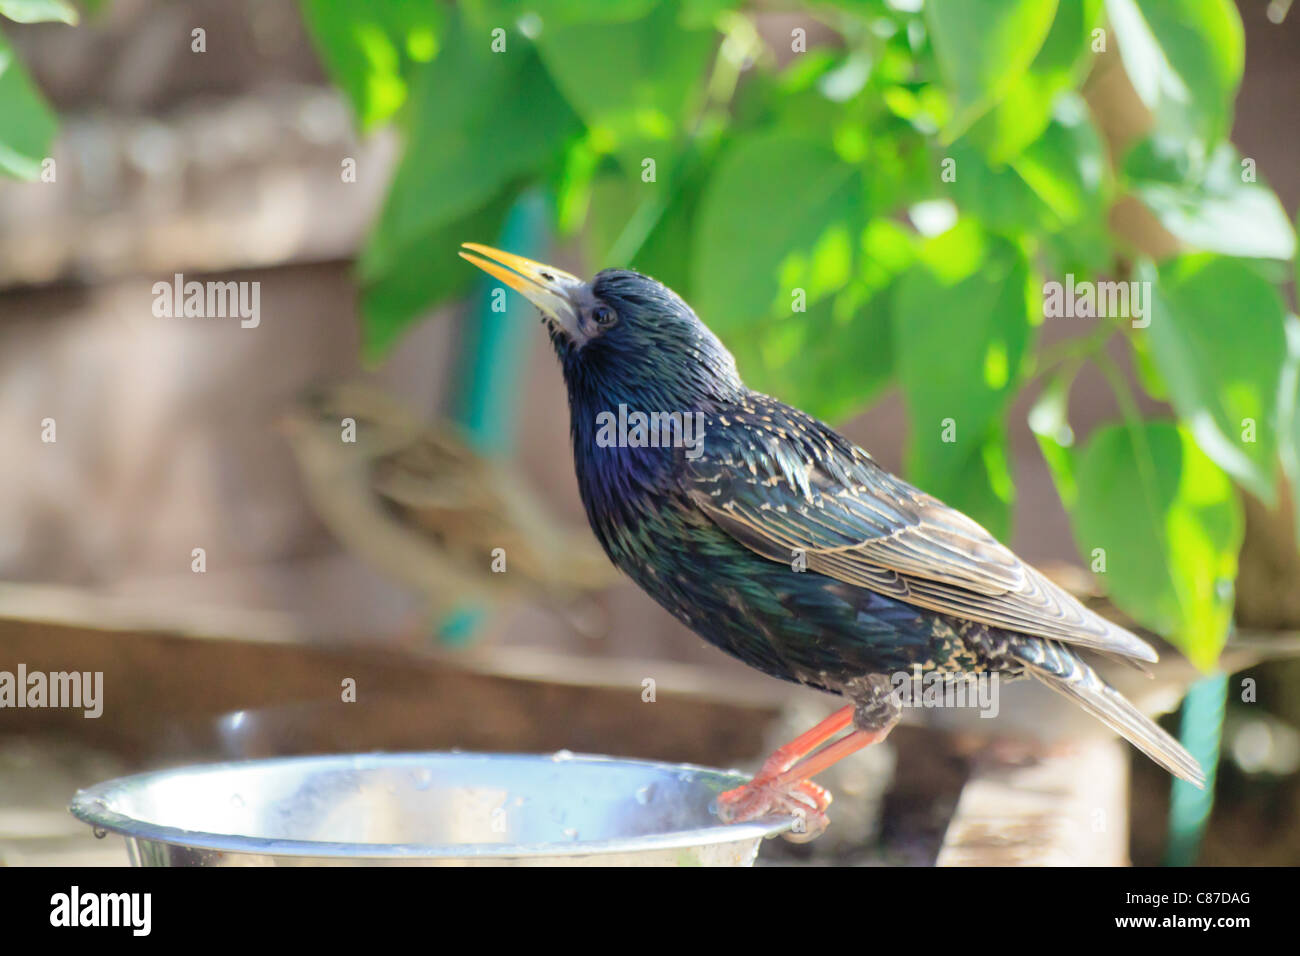 Common European Starling (Sturnus vulgaris) perched on bird bath looking up Stock Photo